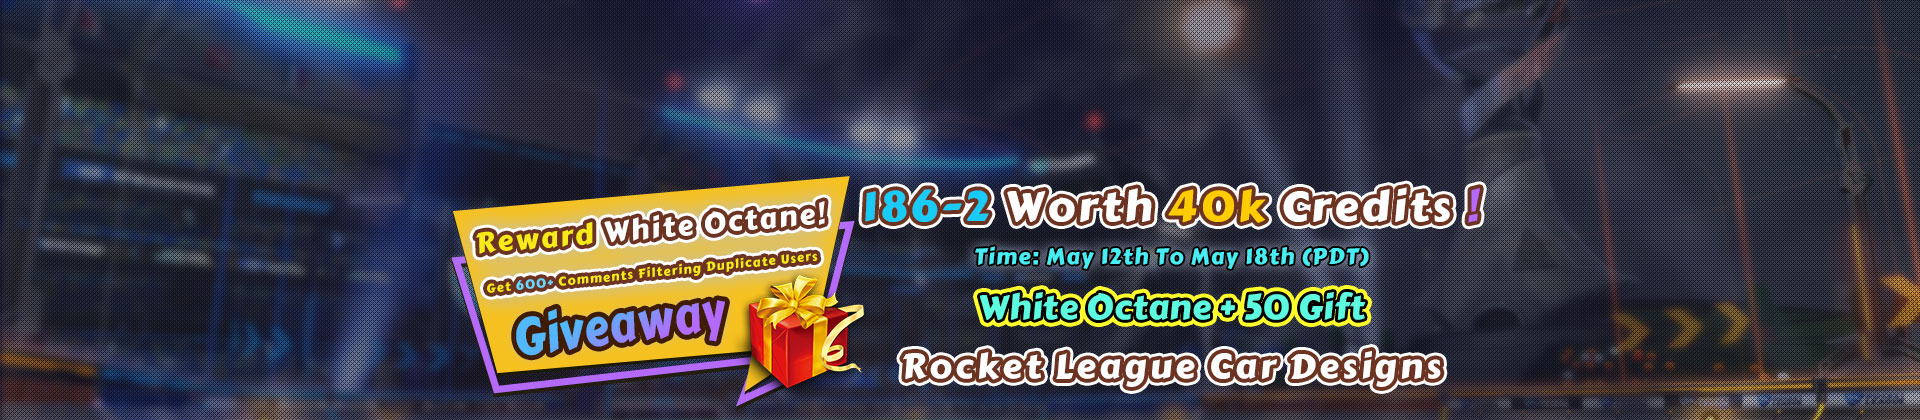 Rocket League Items Giveaway 186-2